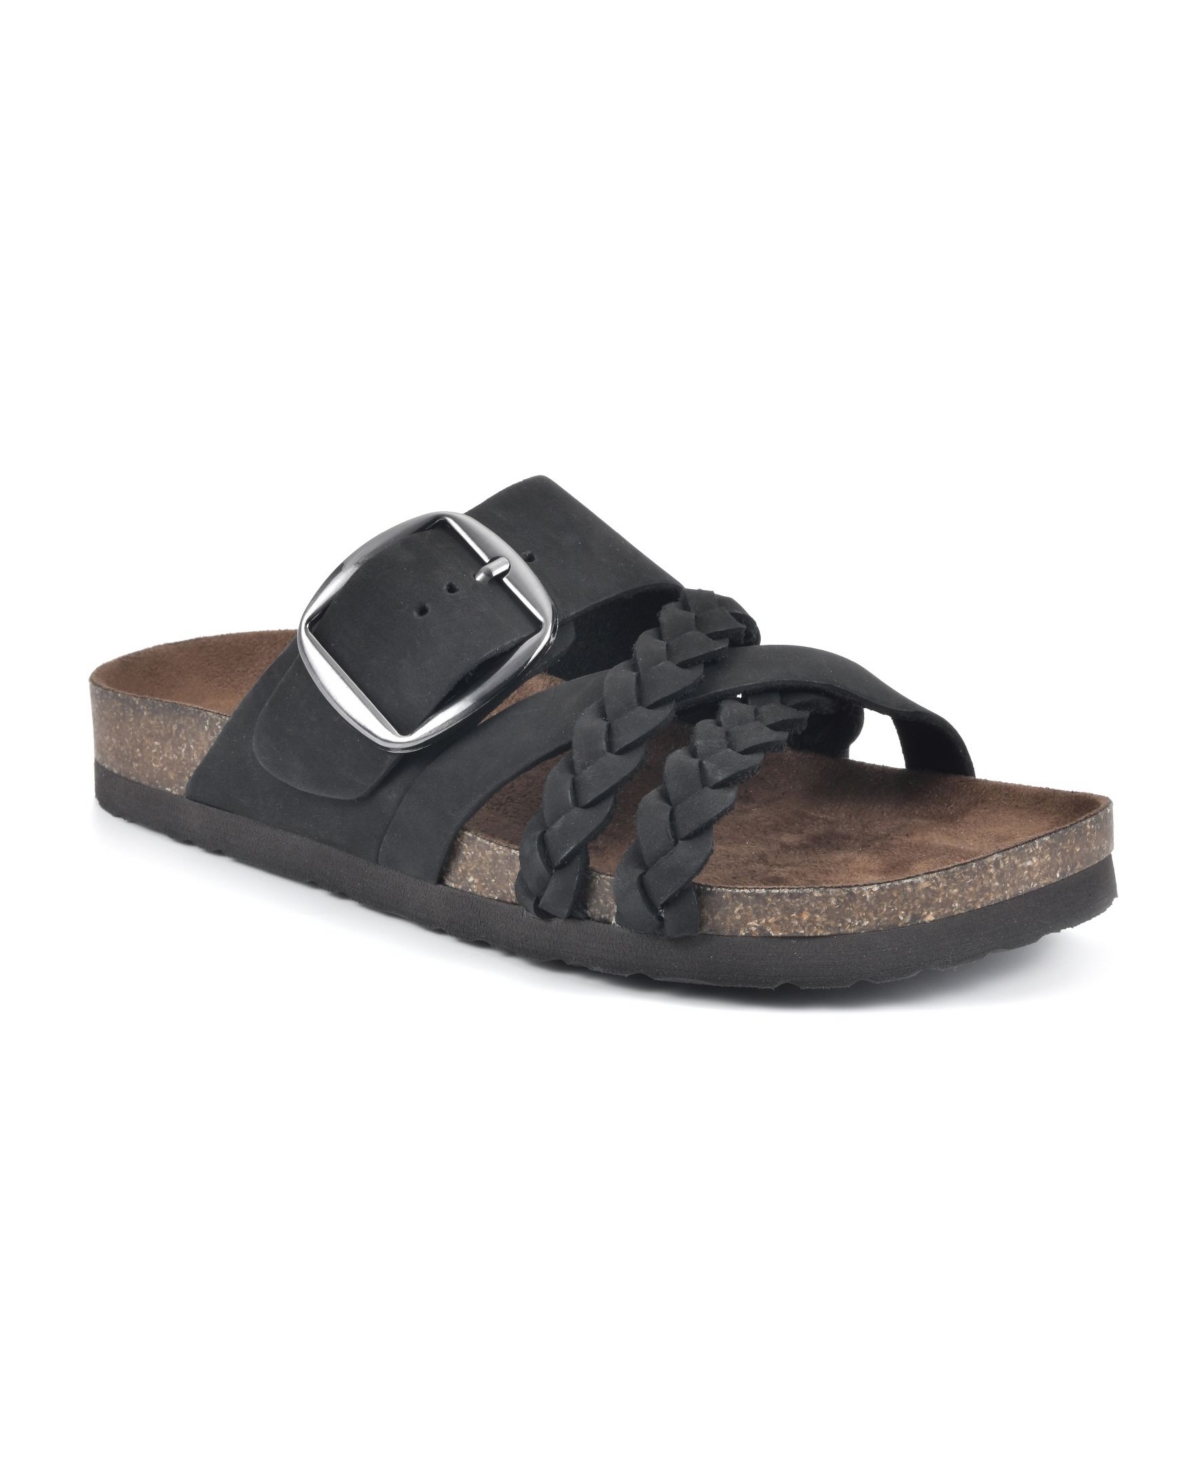 Women's Healing Footbed Sandals - Black, Nubuck